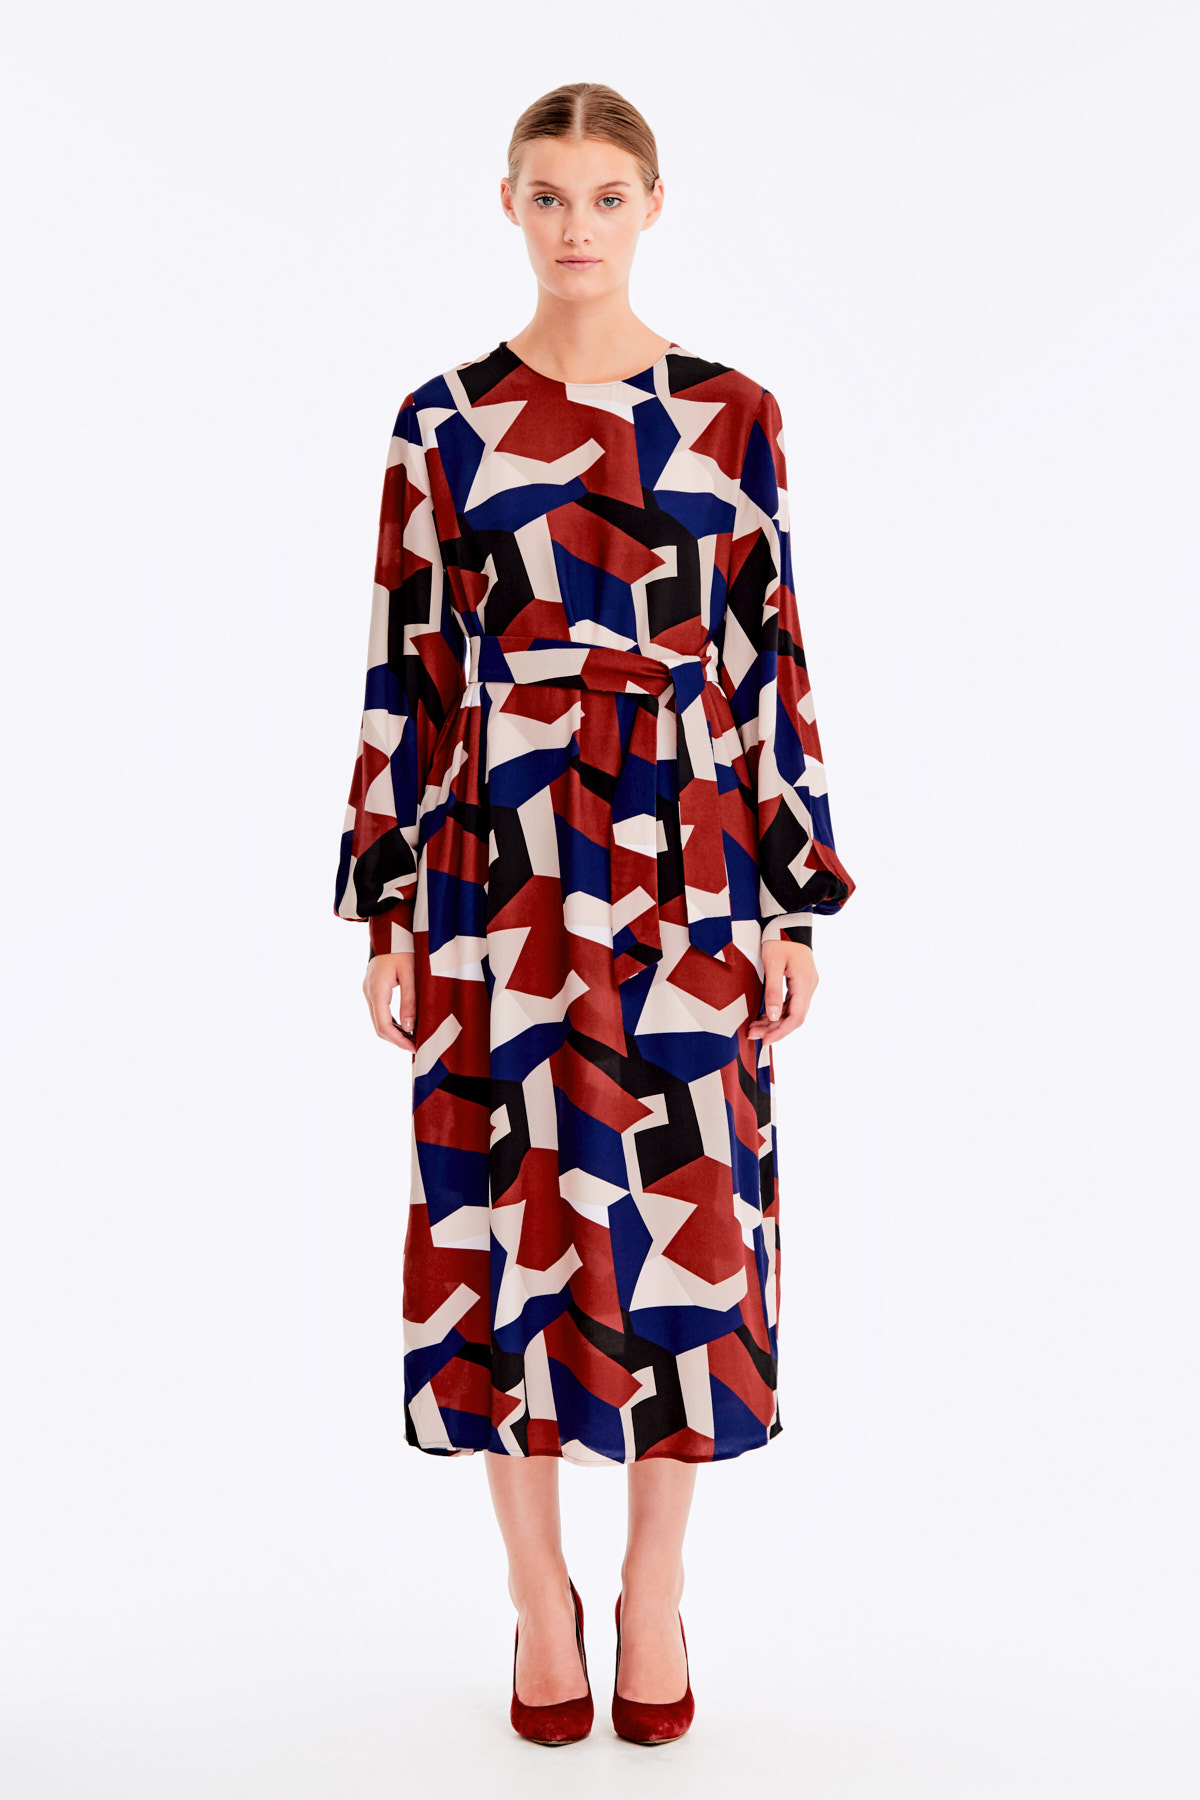 Free midi dress with variegated geometric print ¶¶, photo 4